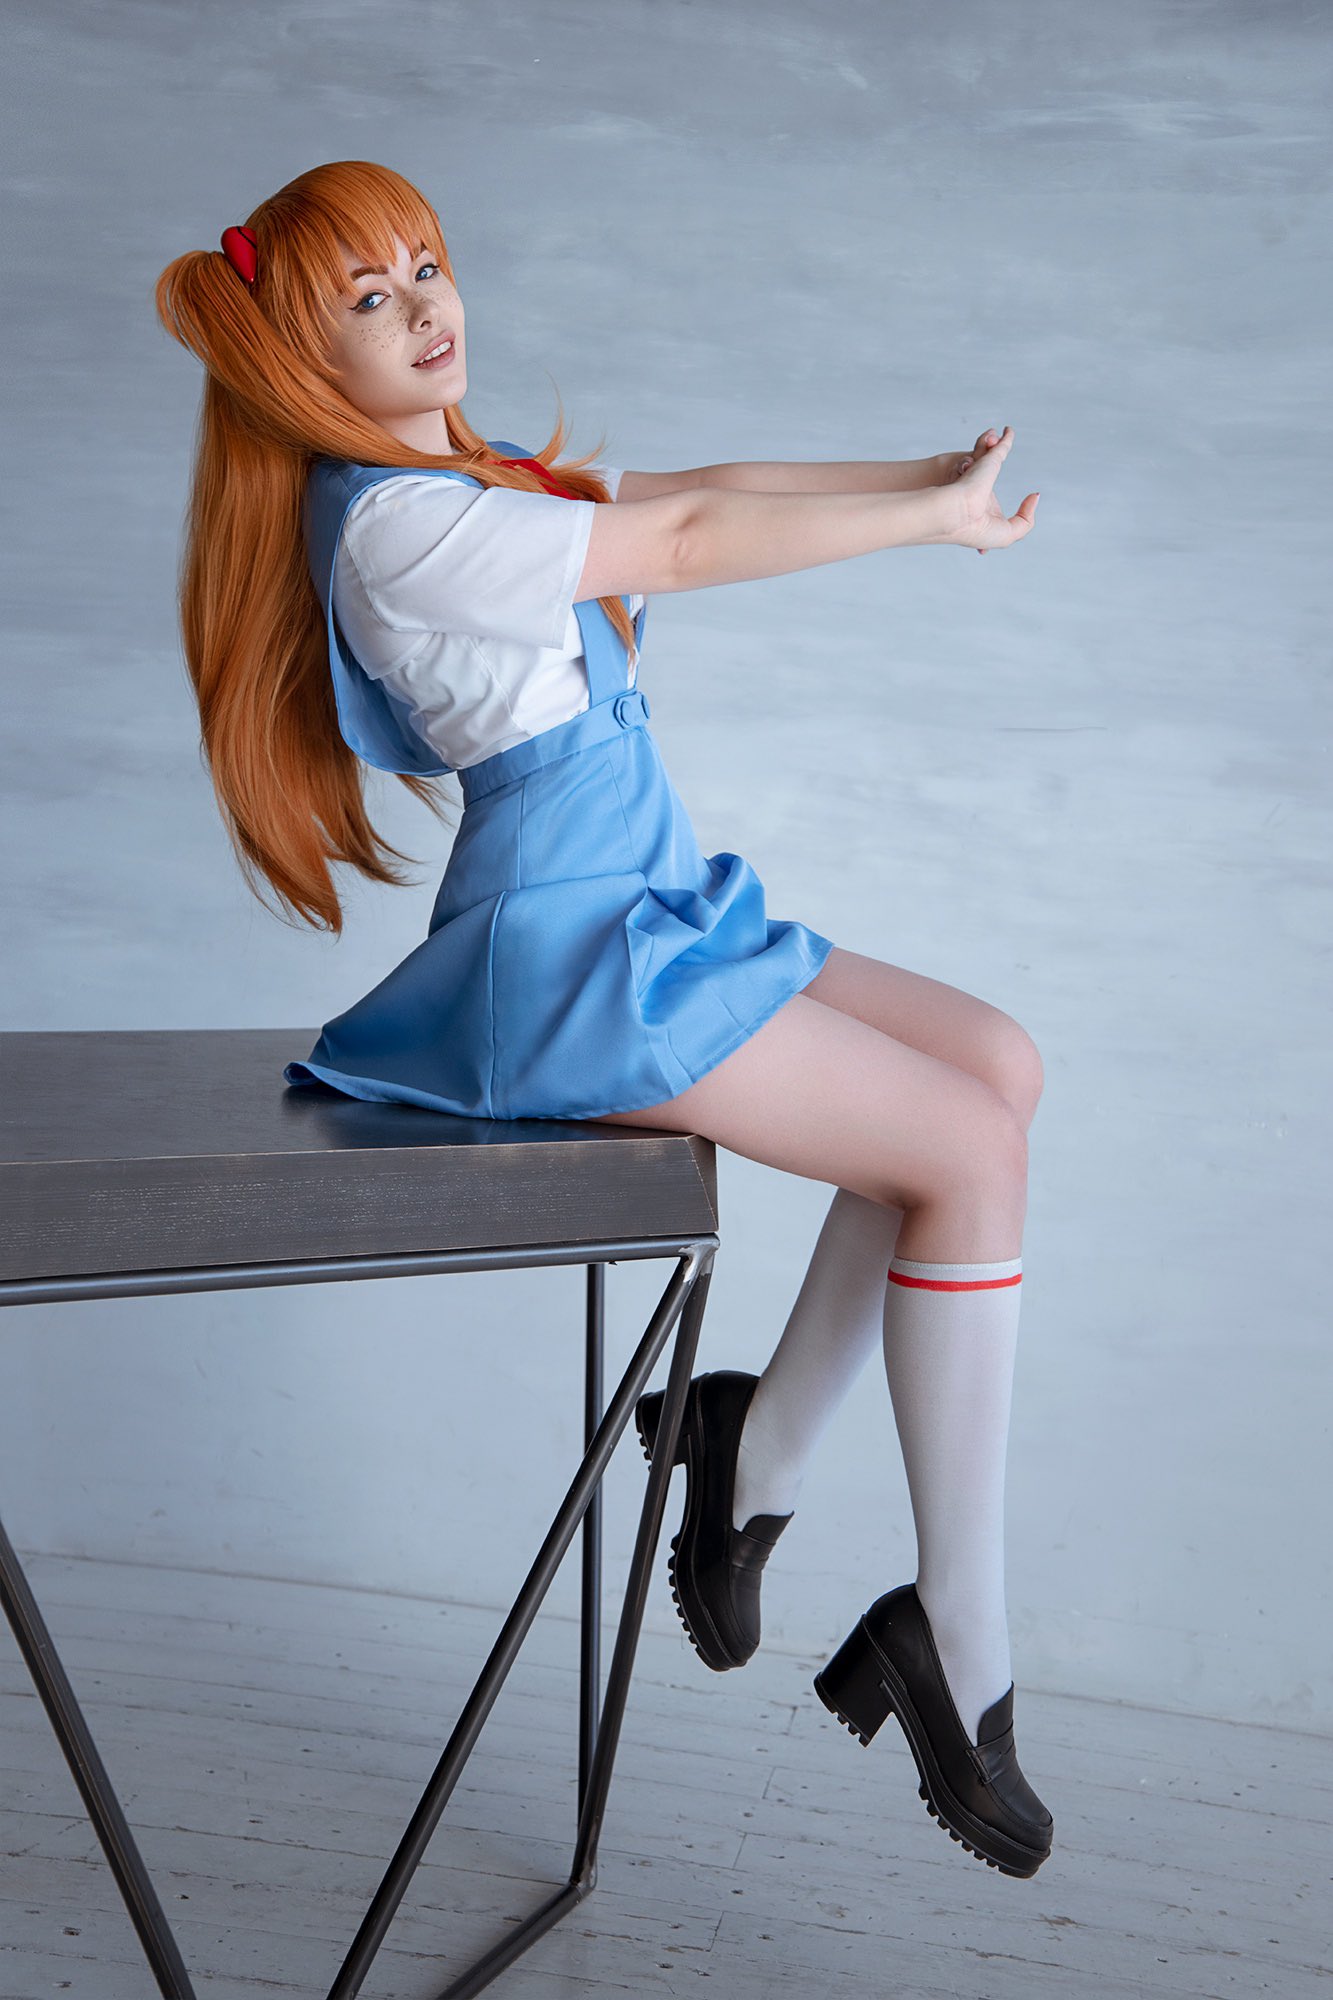 Neon Genesis Evangelion Asuka Langley Soryu Cosplay Women Model Redhead Anime Girls School Uniform S 1333x2000